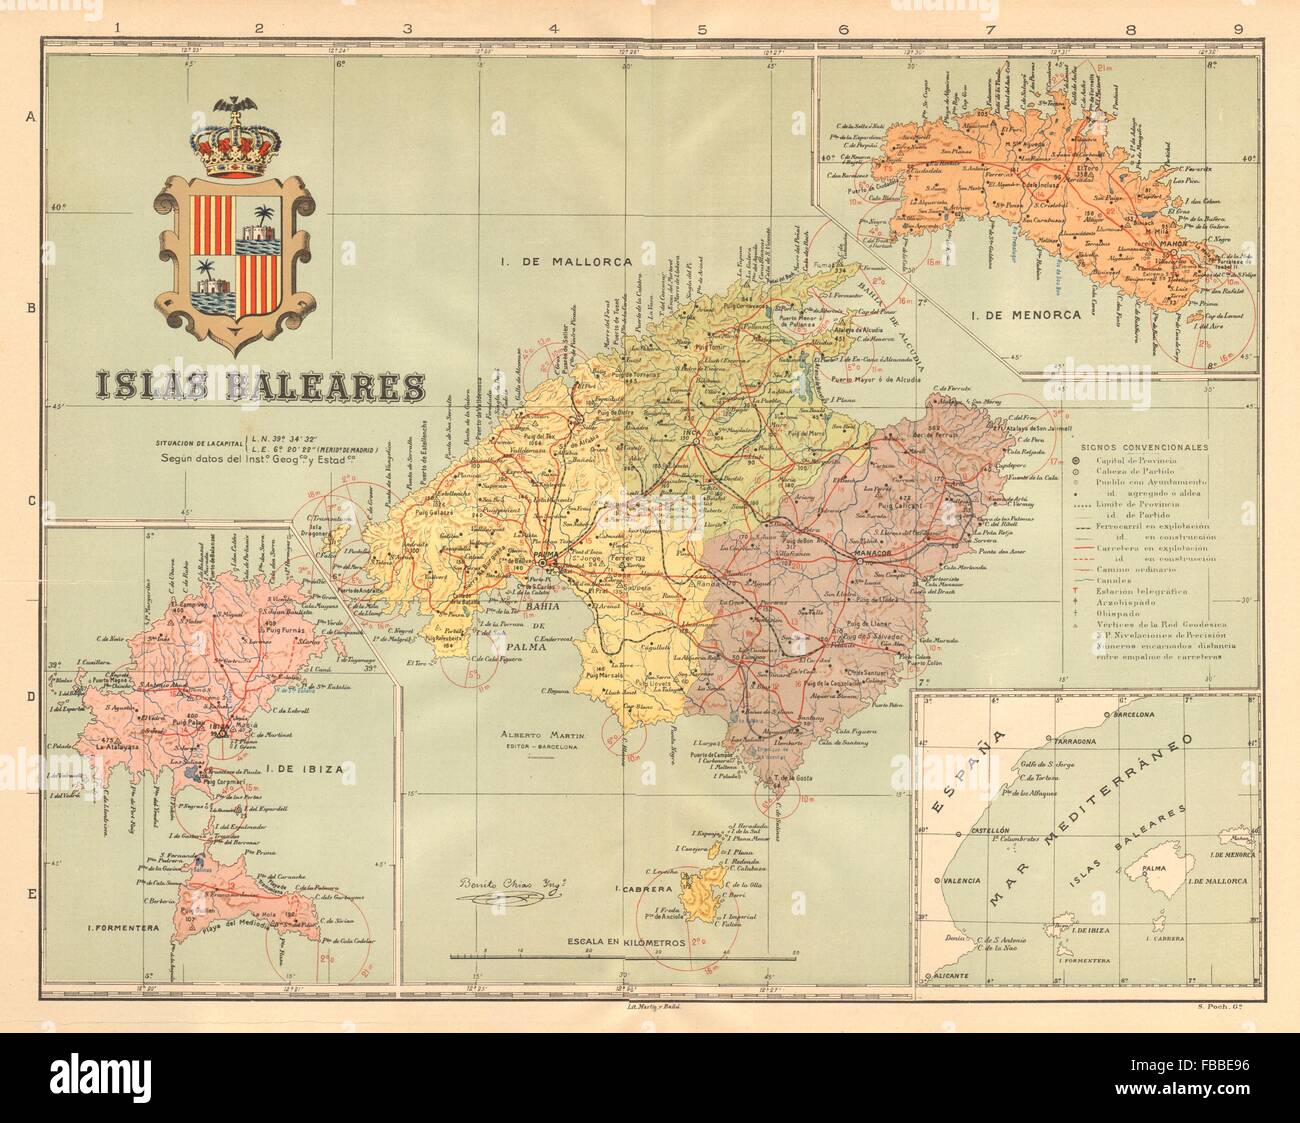 ISLAS BALEARES ILLES BALEARS Mallorca Ibiza Menorca Balearic Islands, c1911 map Stock Photo